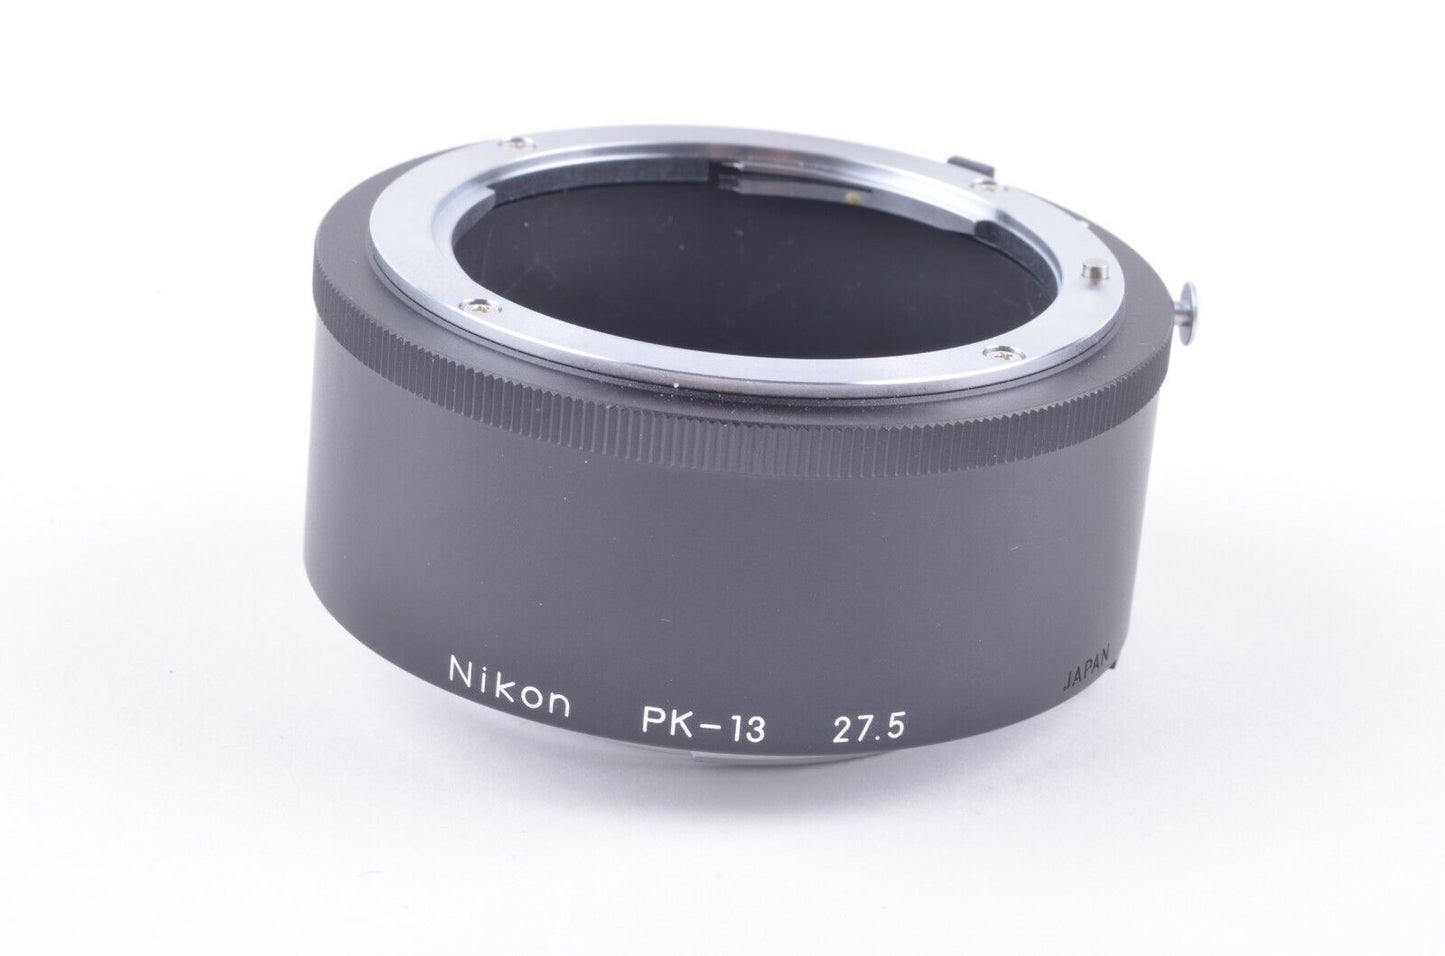 MINT NIKON PK-13 27.5mm AUTO EXTENSION RING